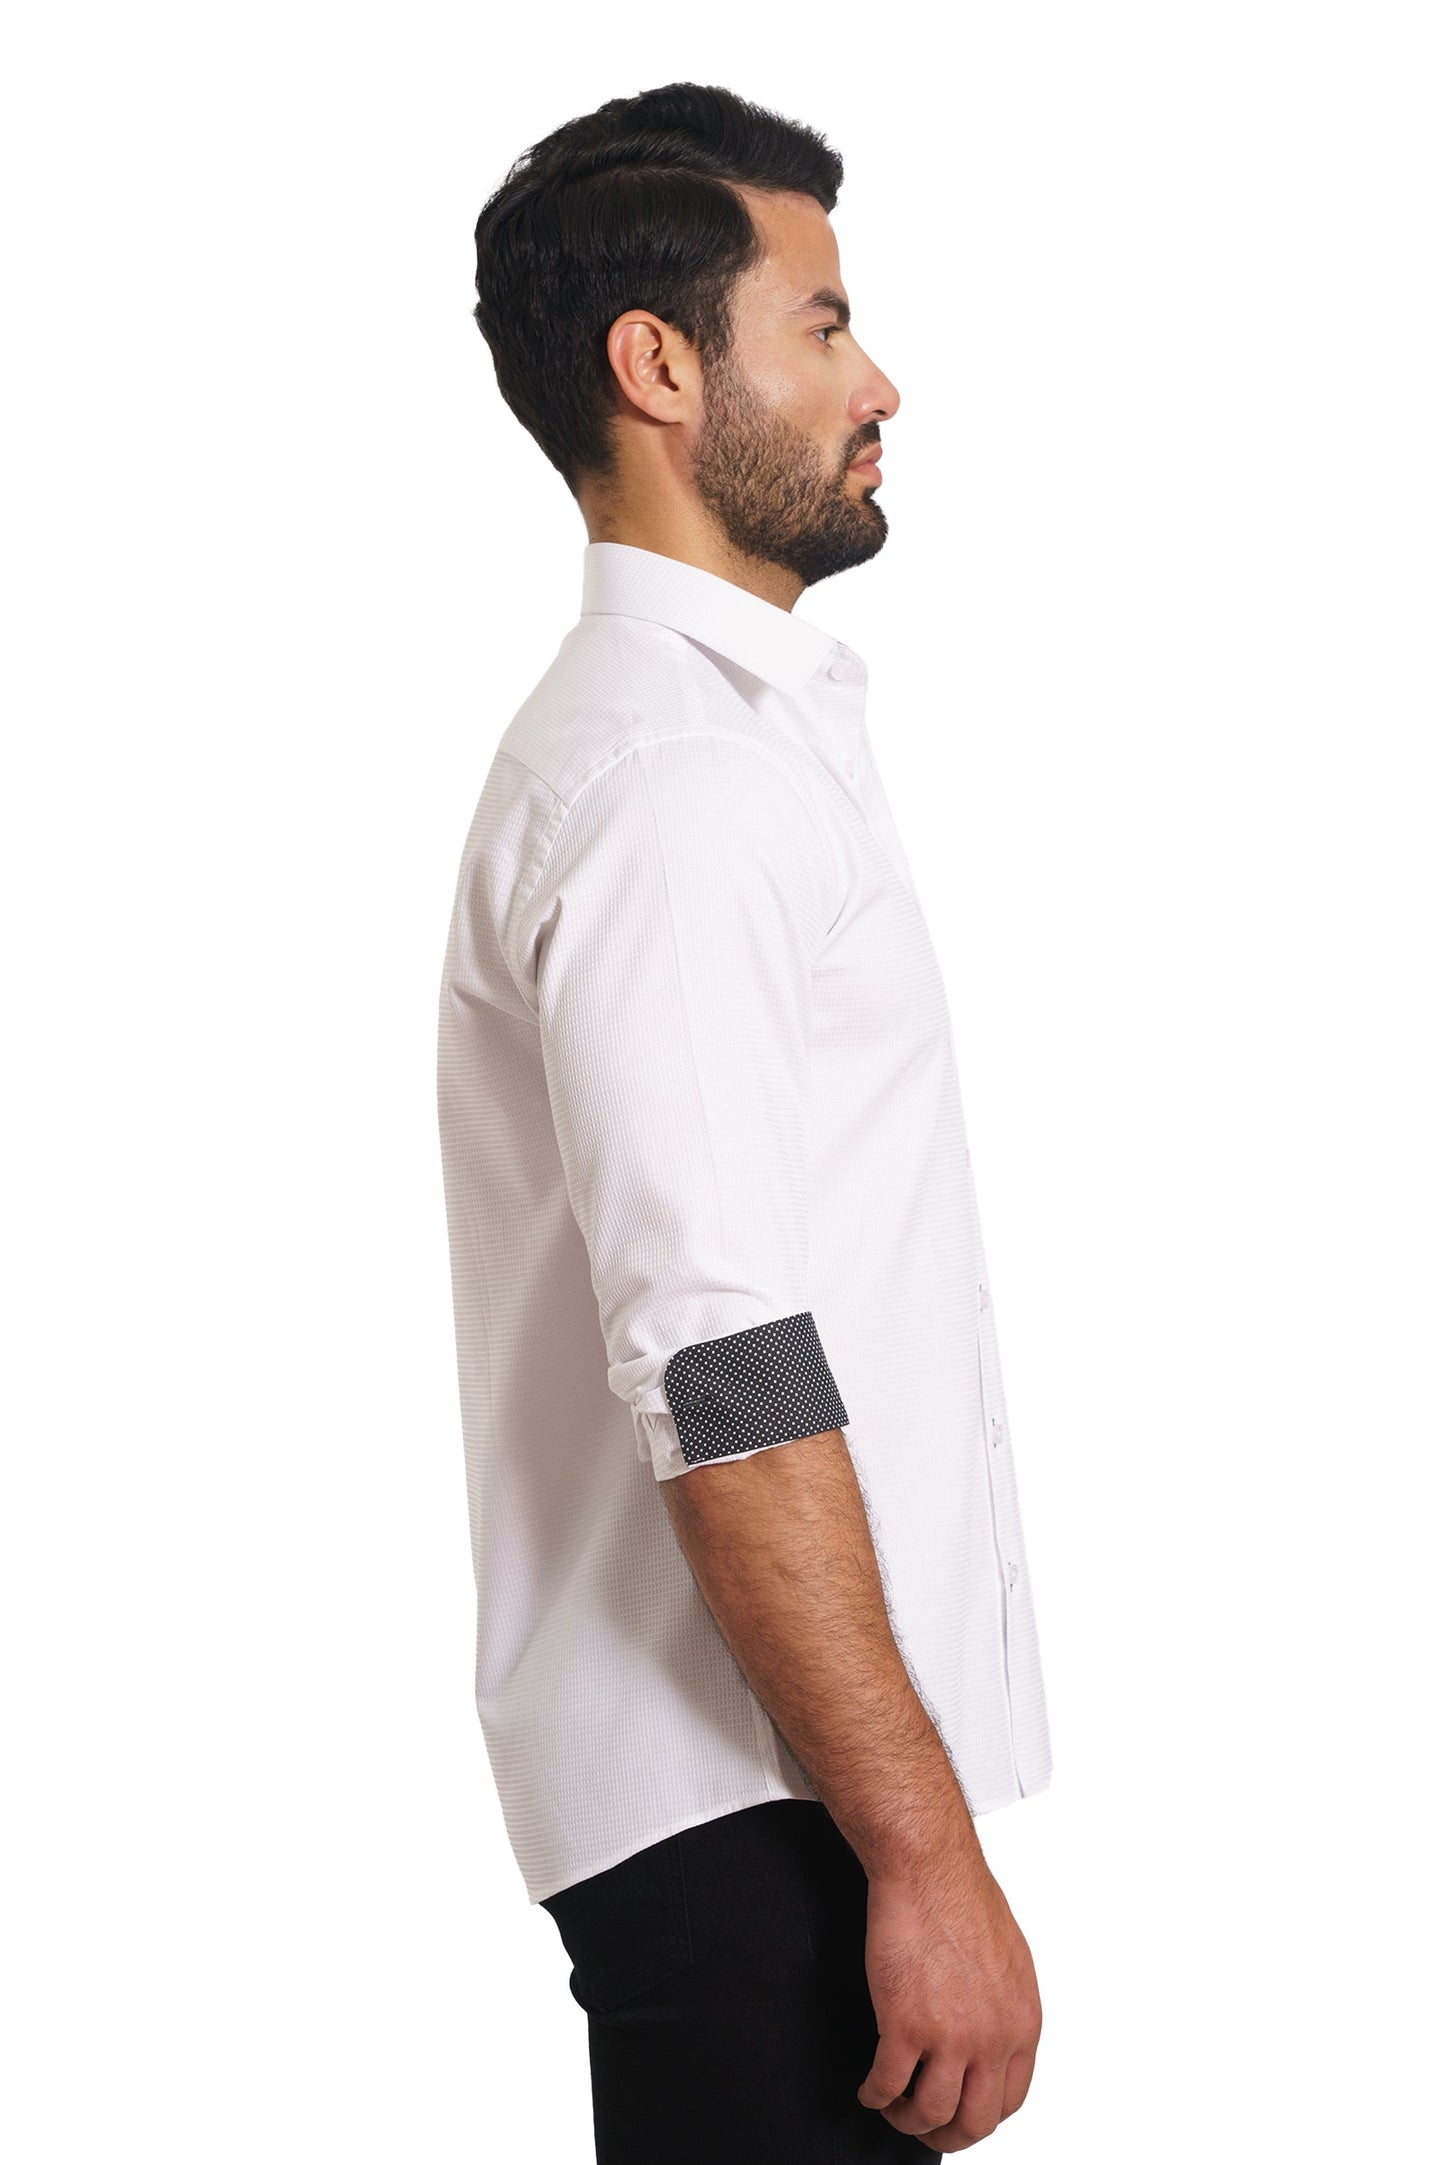 White Long Sleeve Shirt TH-2874 Side